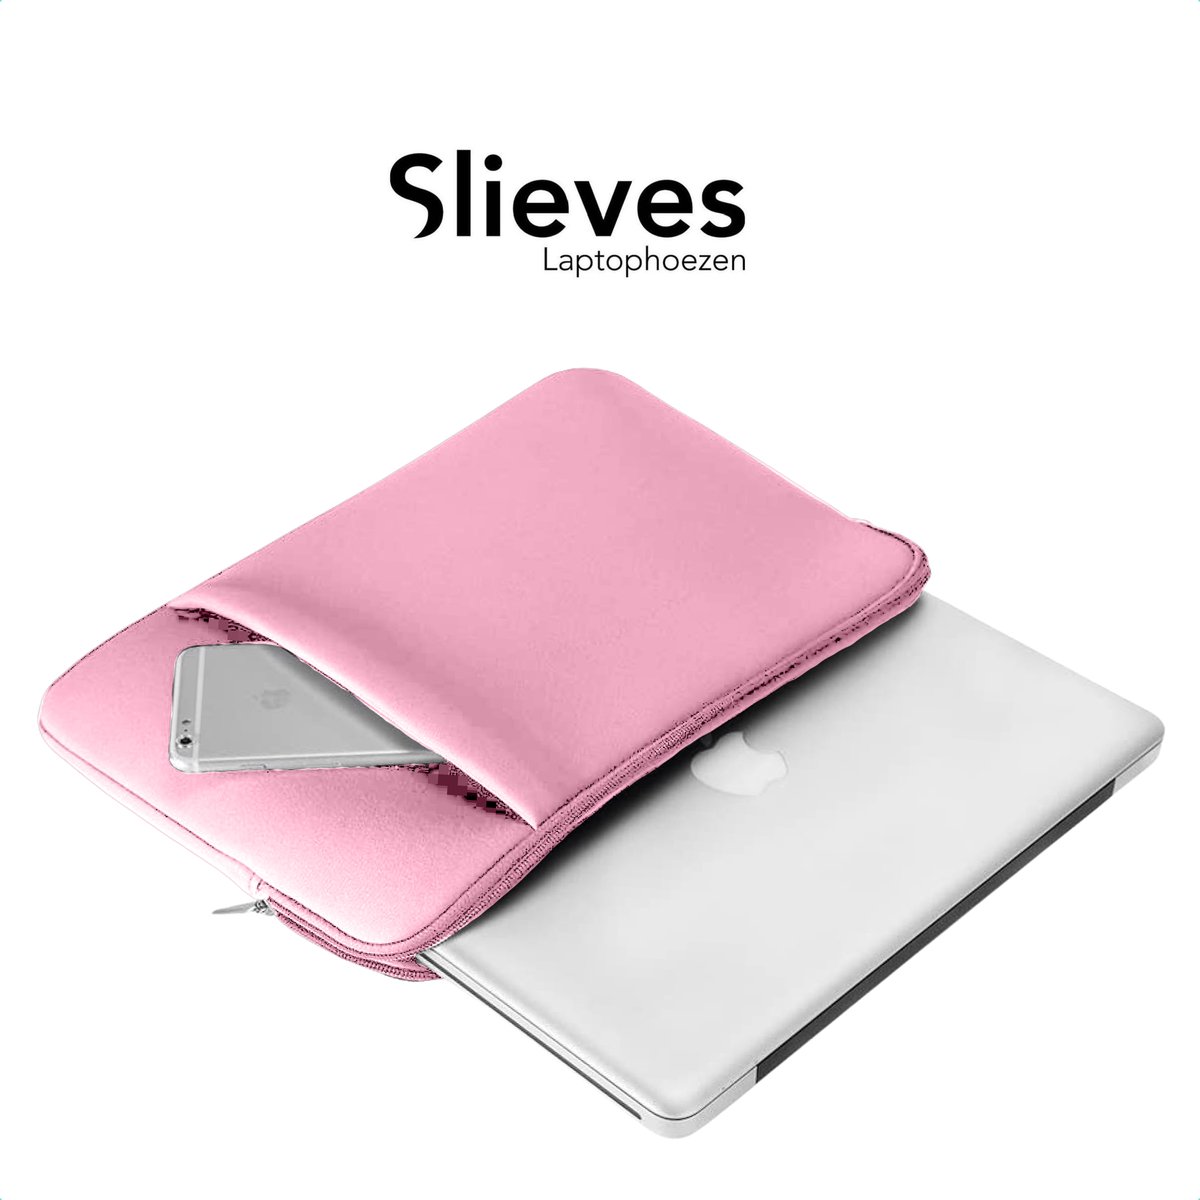 Slieves - Laptophoes - 14 inch - Laptop Sleeve - Schok Resistent - met Opbergvak - Neoprene - Roze